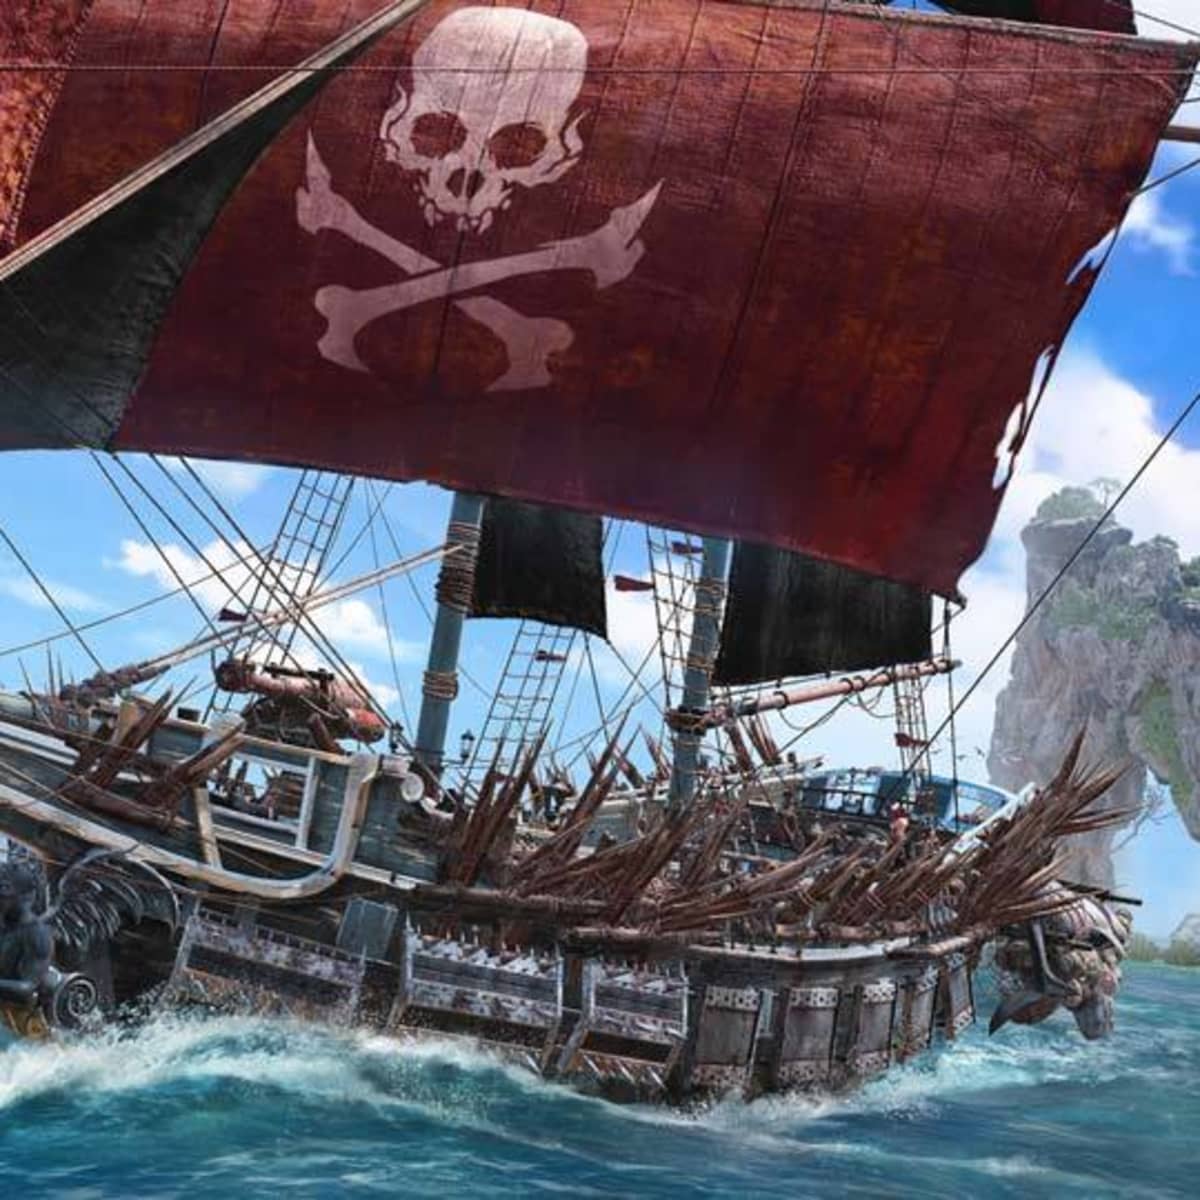 Ubisoft's Skull & Bones Releases November 8 on Epic Games Store - Epic  Games Store